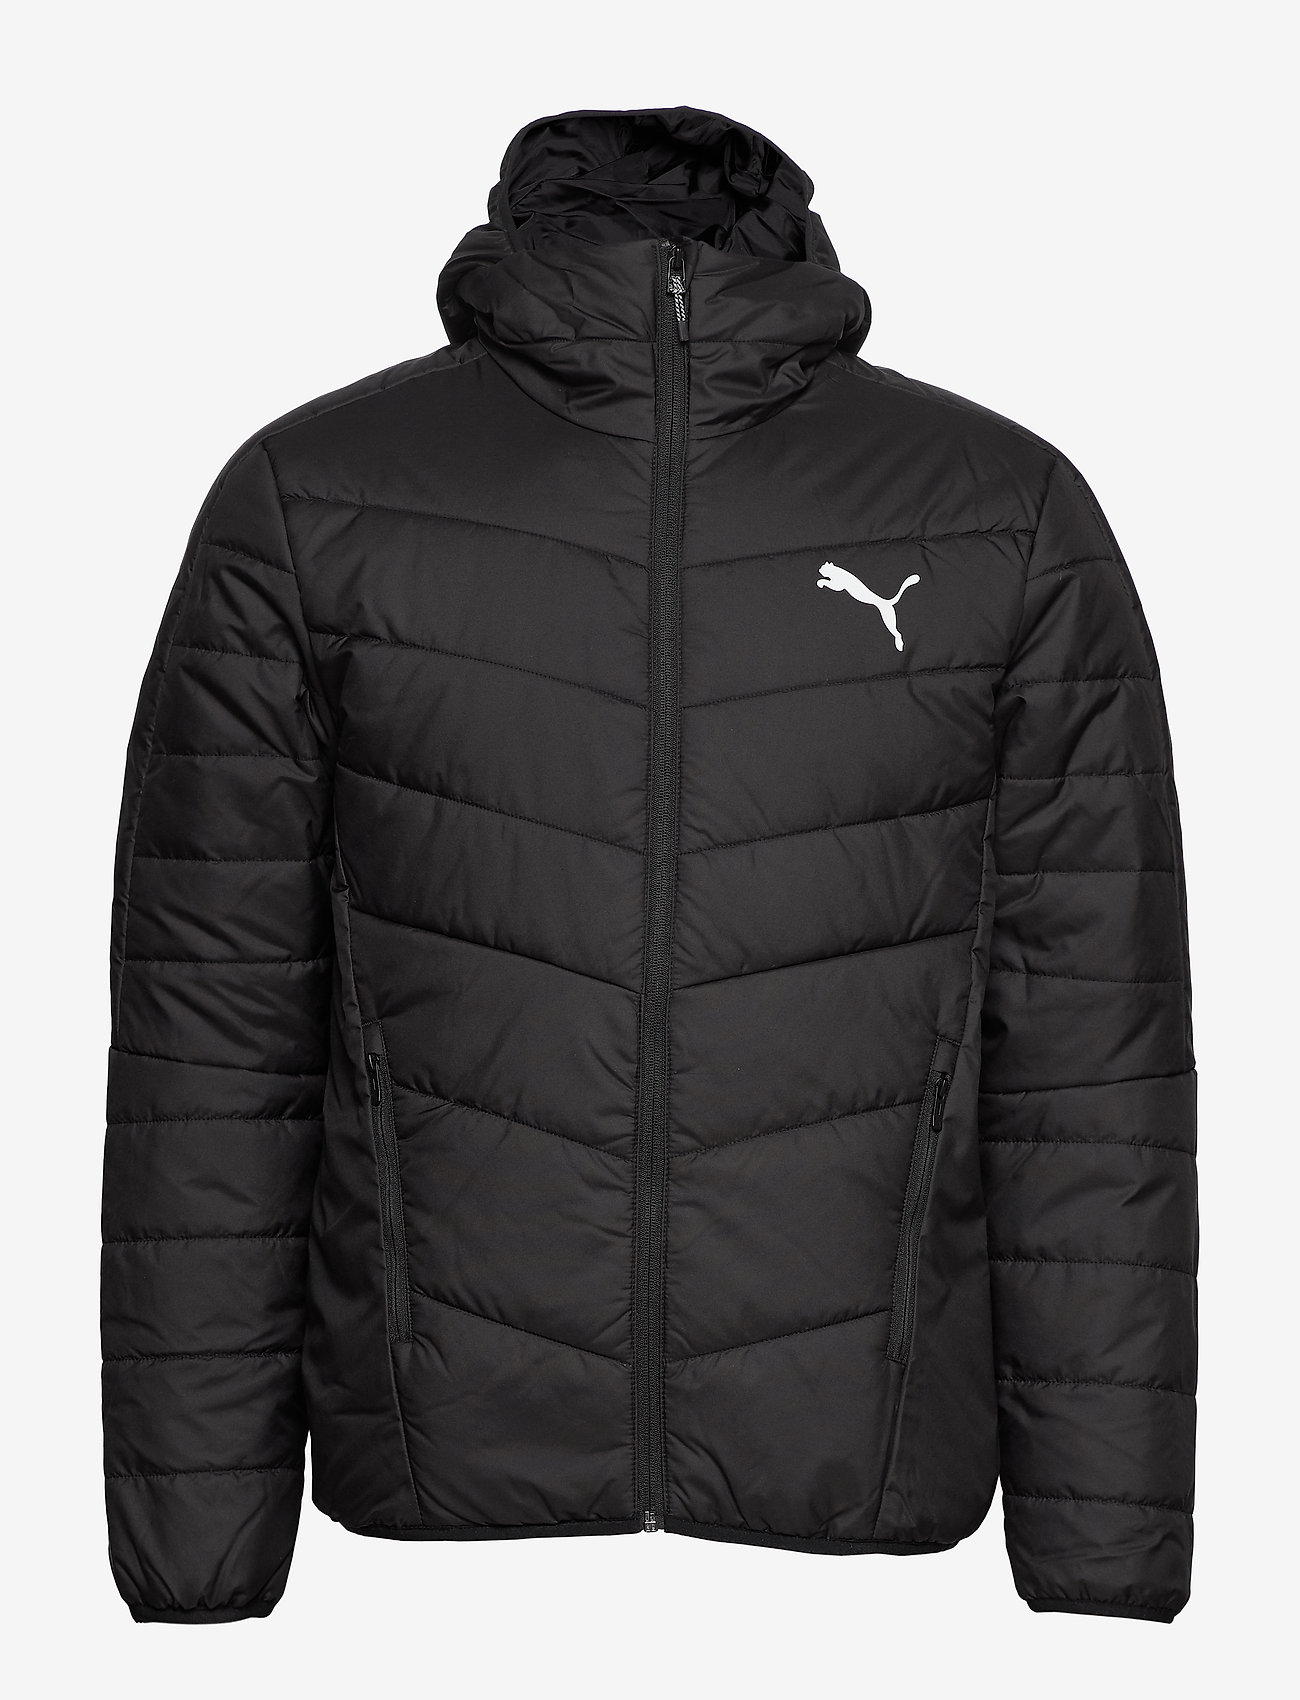 Warmcell Padded Jacket (Puma Black) (57 